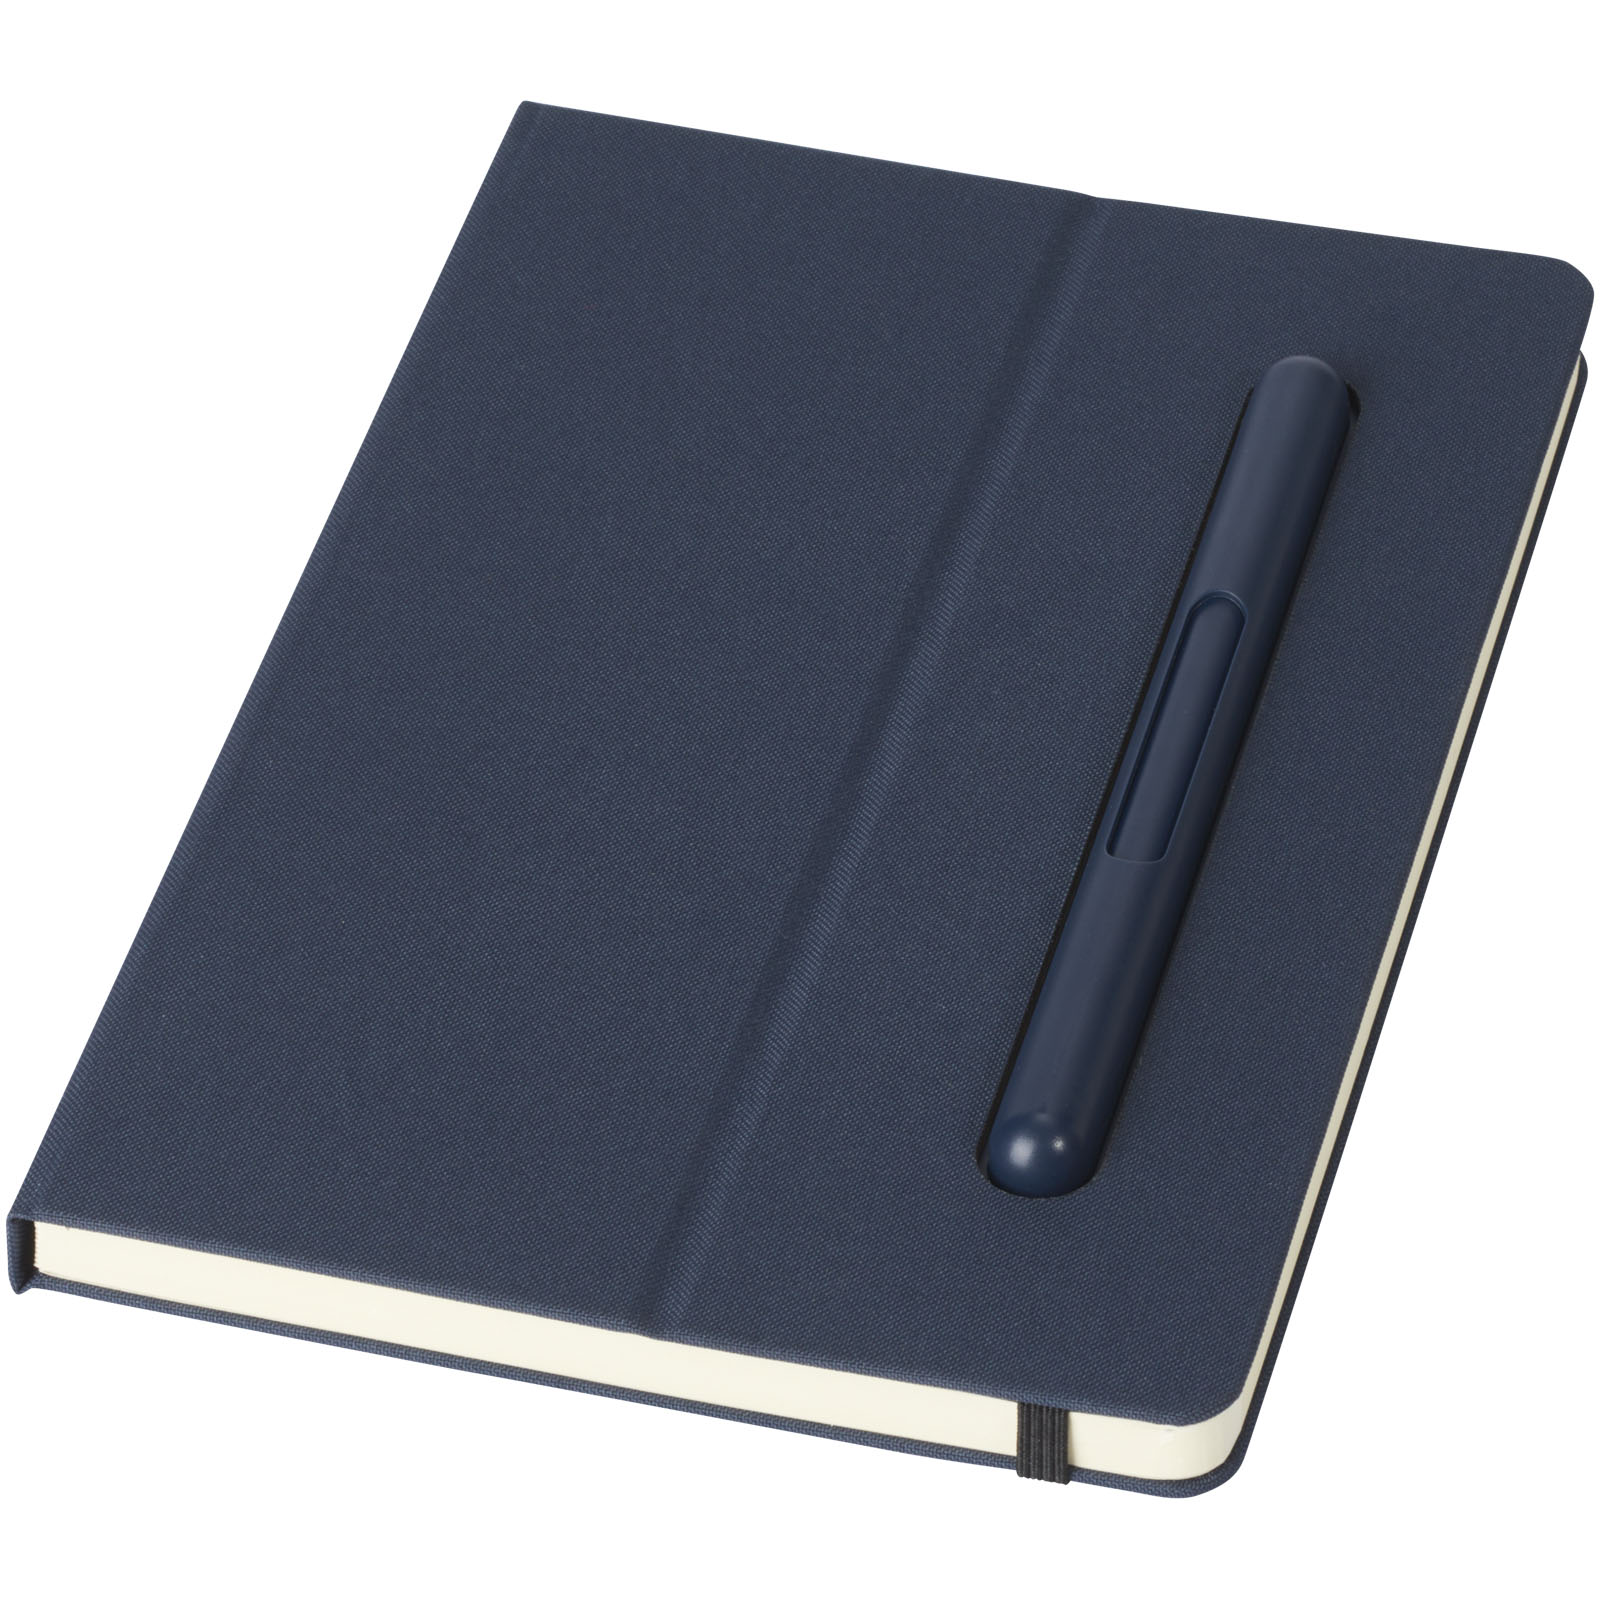 Advertising Hard cover notebooks - Skribo ballpoint pen and notebook set